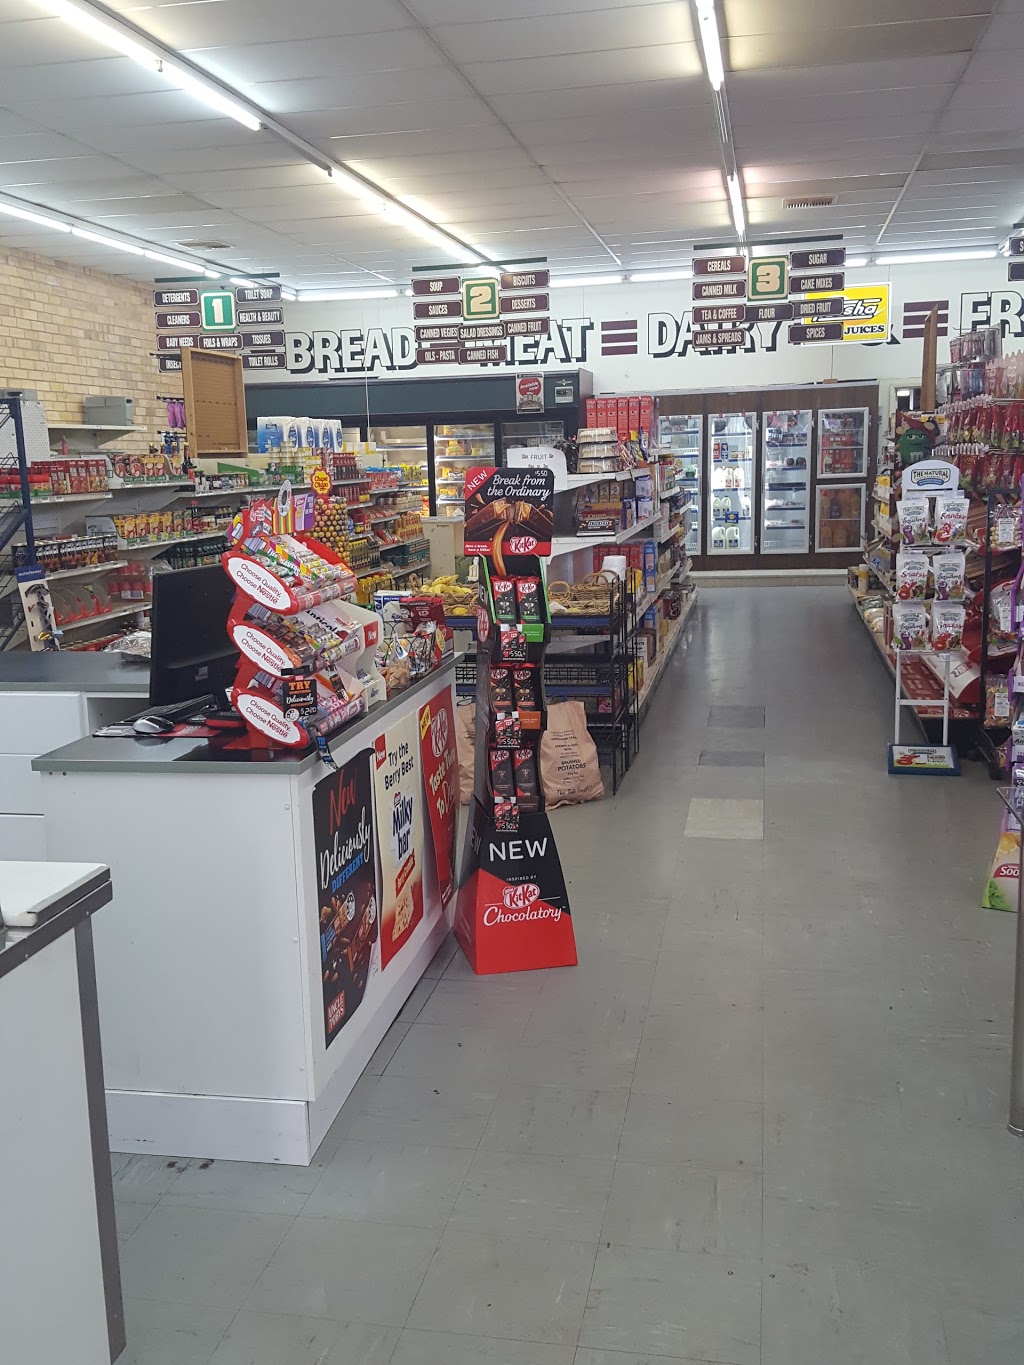 The Settlement Goodfellows Supermarket | supermarket | Barramul St, Simpson VIC 3266, Australia | 0355943340 OR +61 3 5594 3340